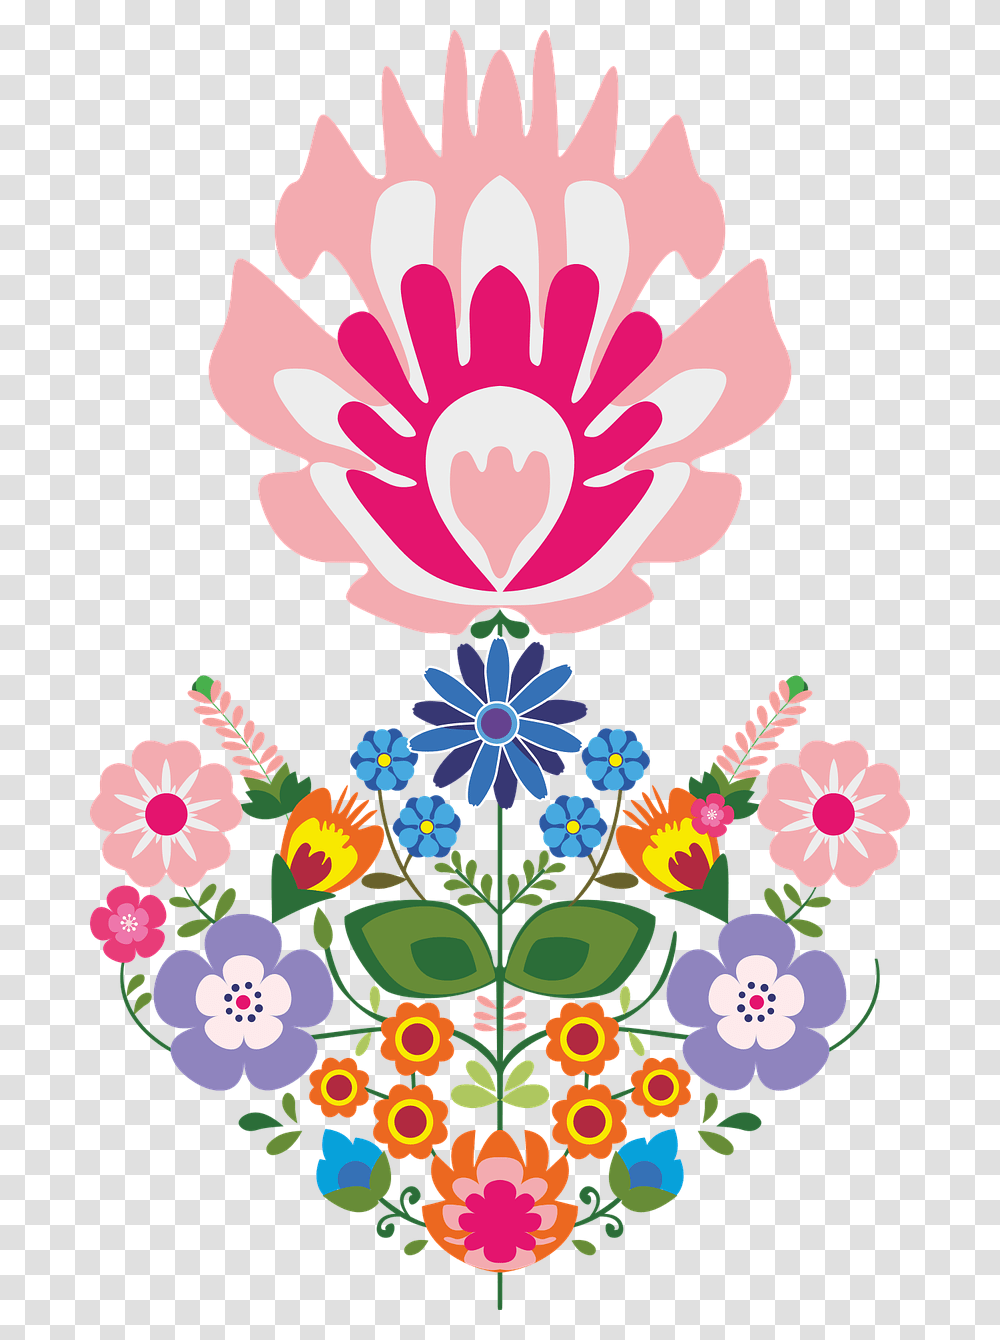 Flower Illustration Ornament Abstract Floral Flower Illustration Abstract, Floral Design, Pattern Transparent Png